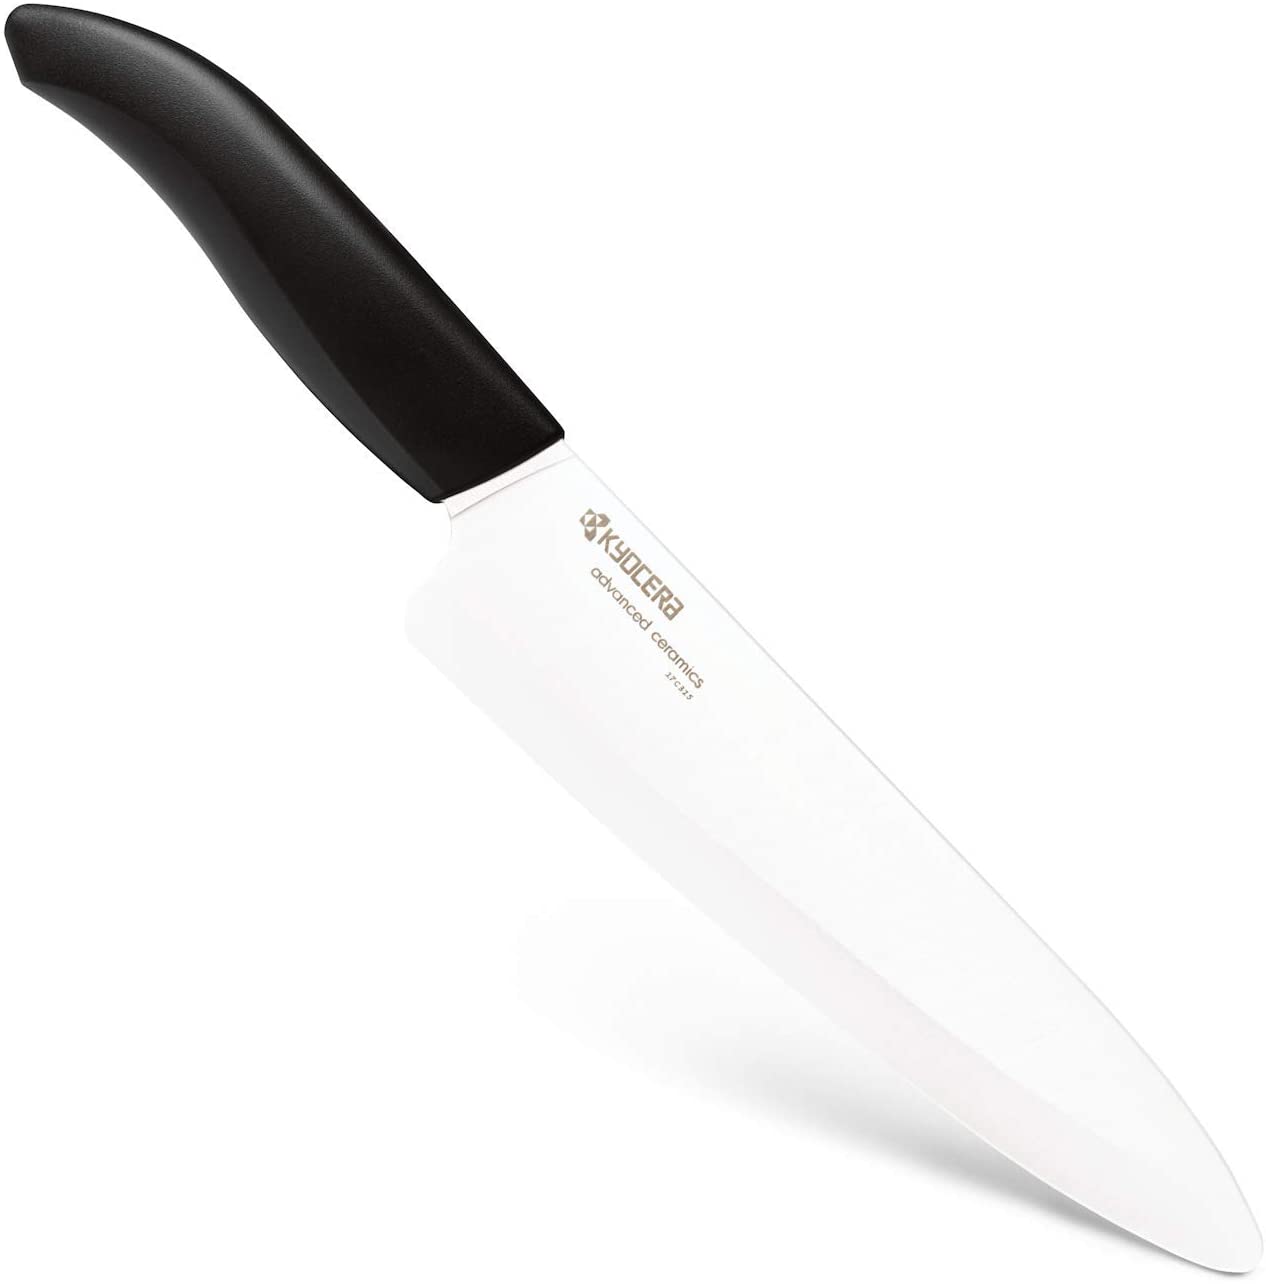 KYOCERA > The ultra-sharp lightweight ceramic utility knife makes